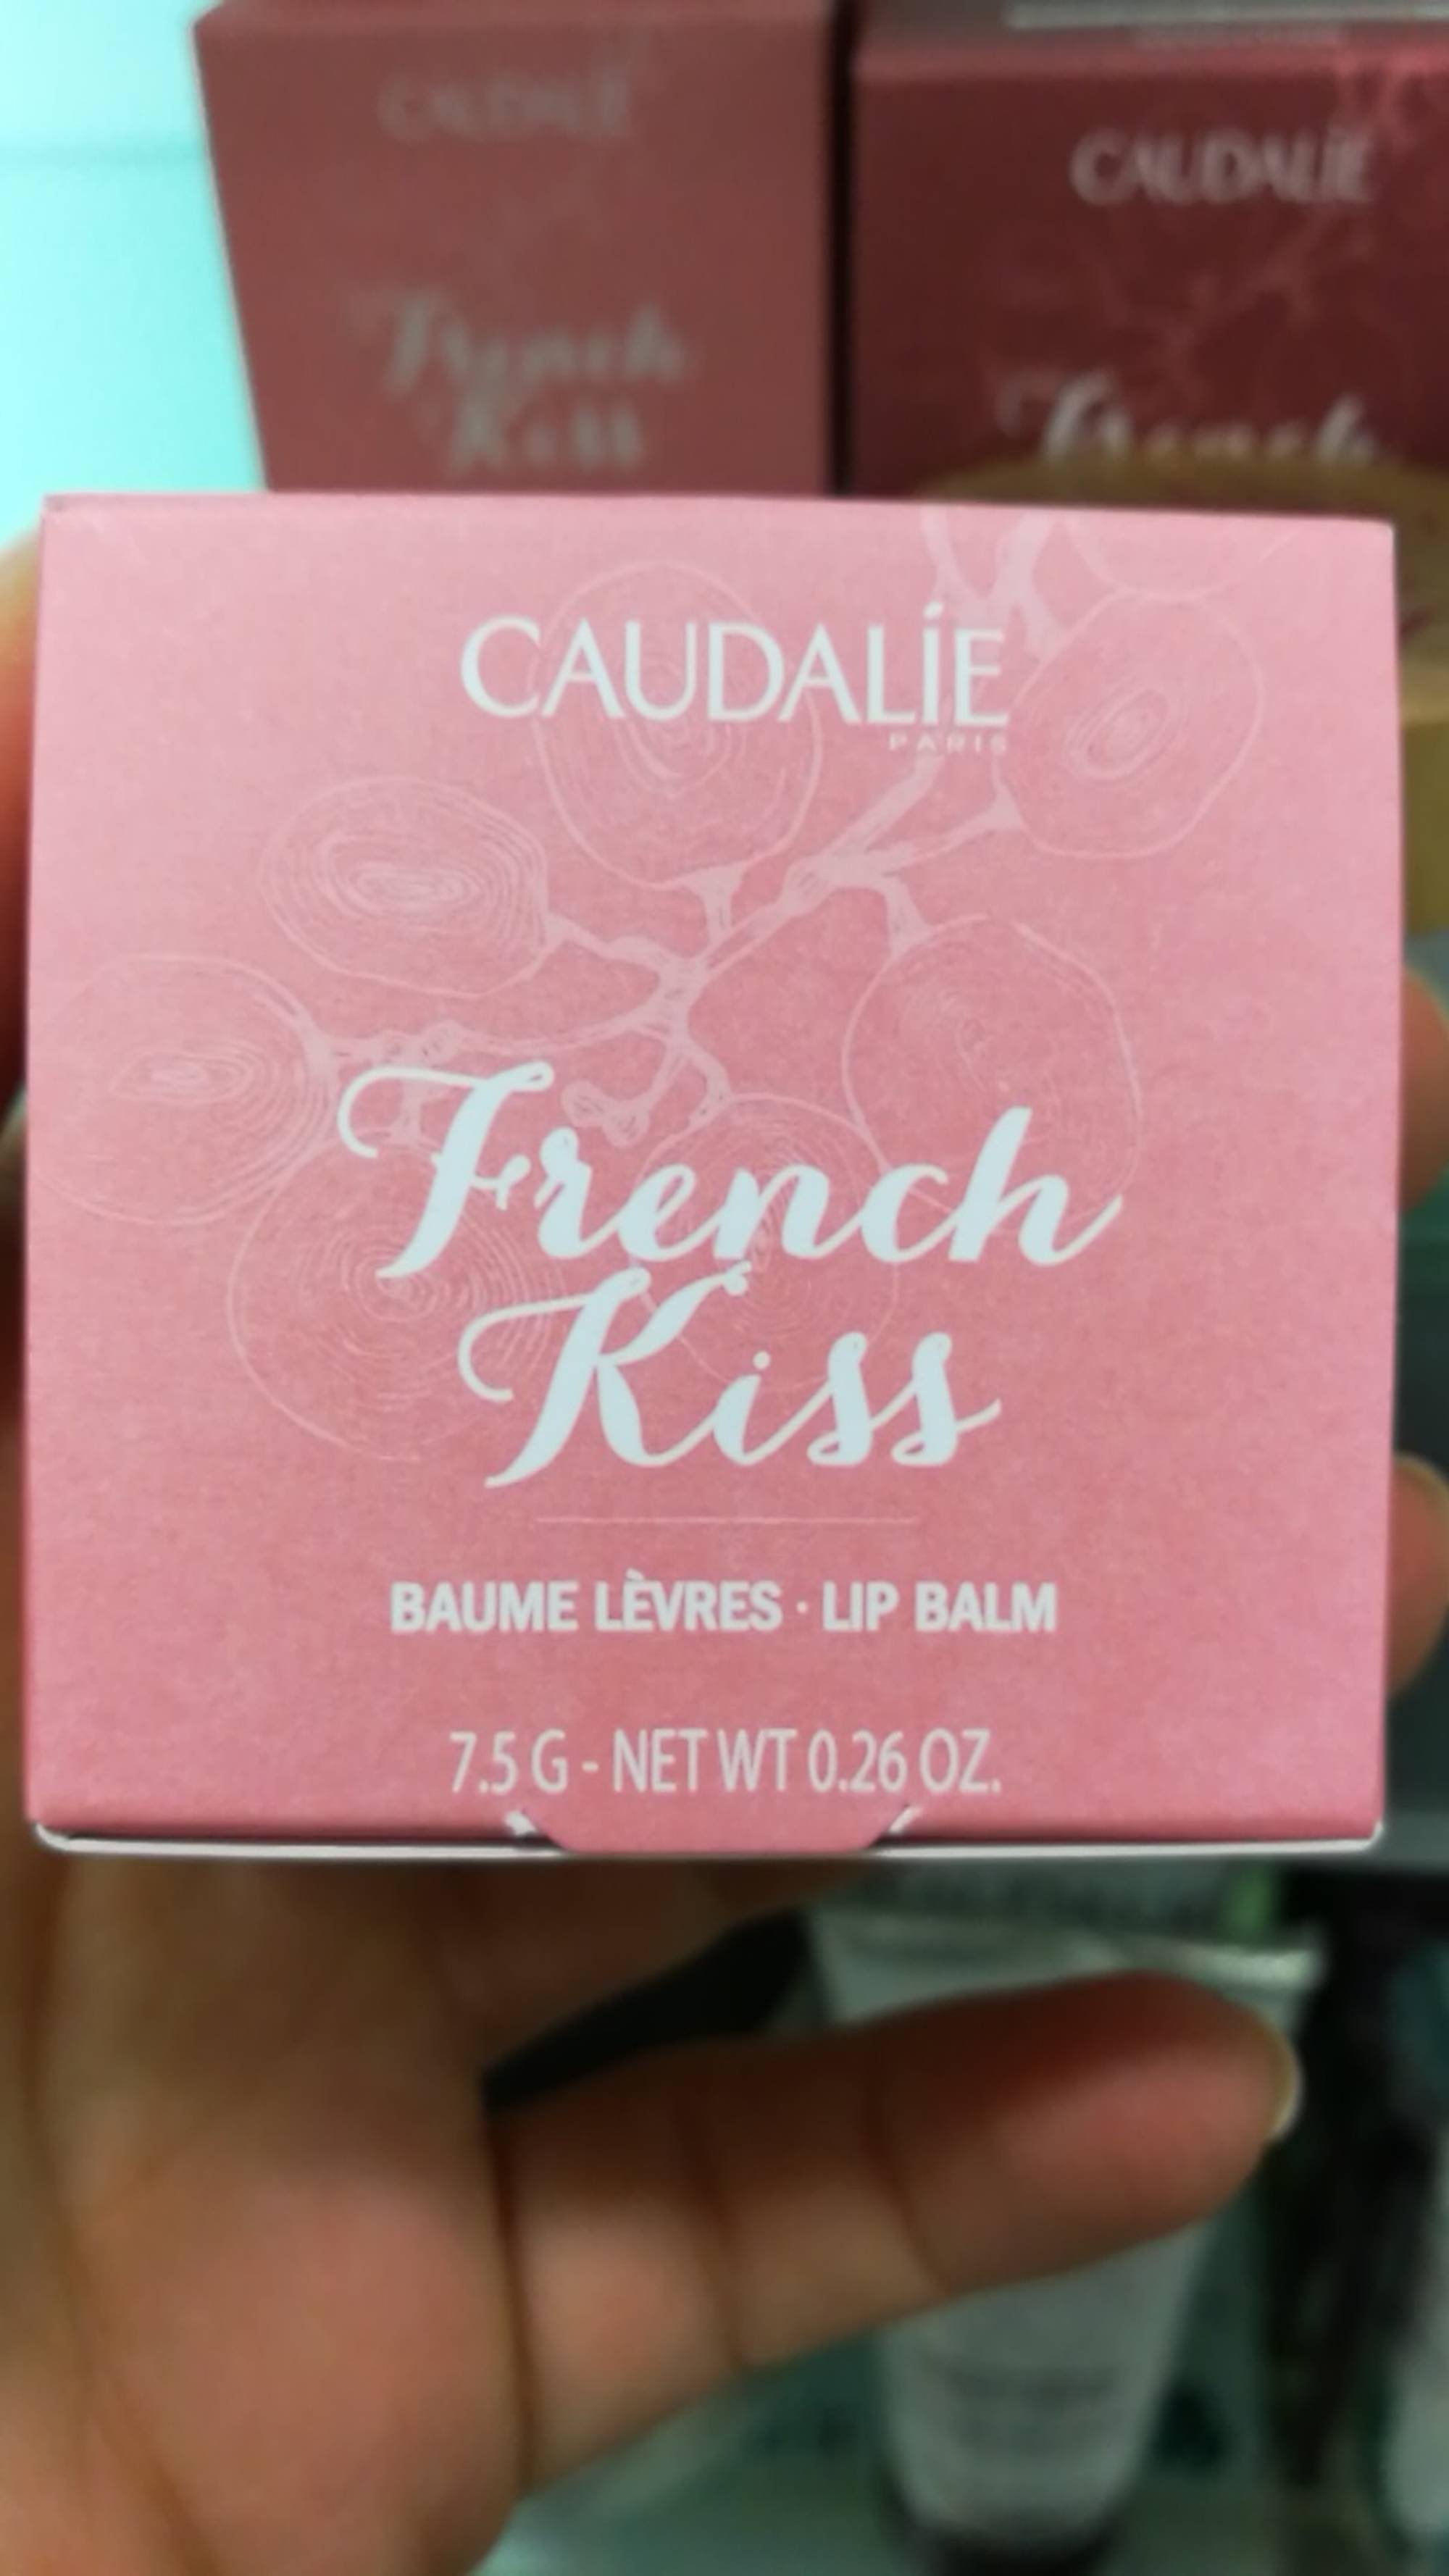 CAUDALIE - French Kiss - Baume lèvres